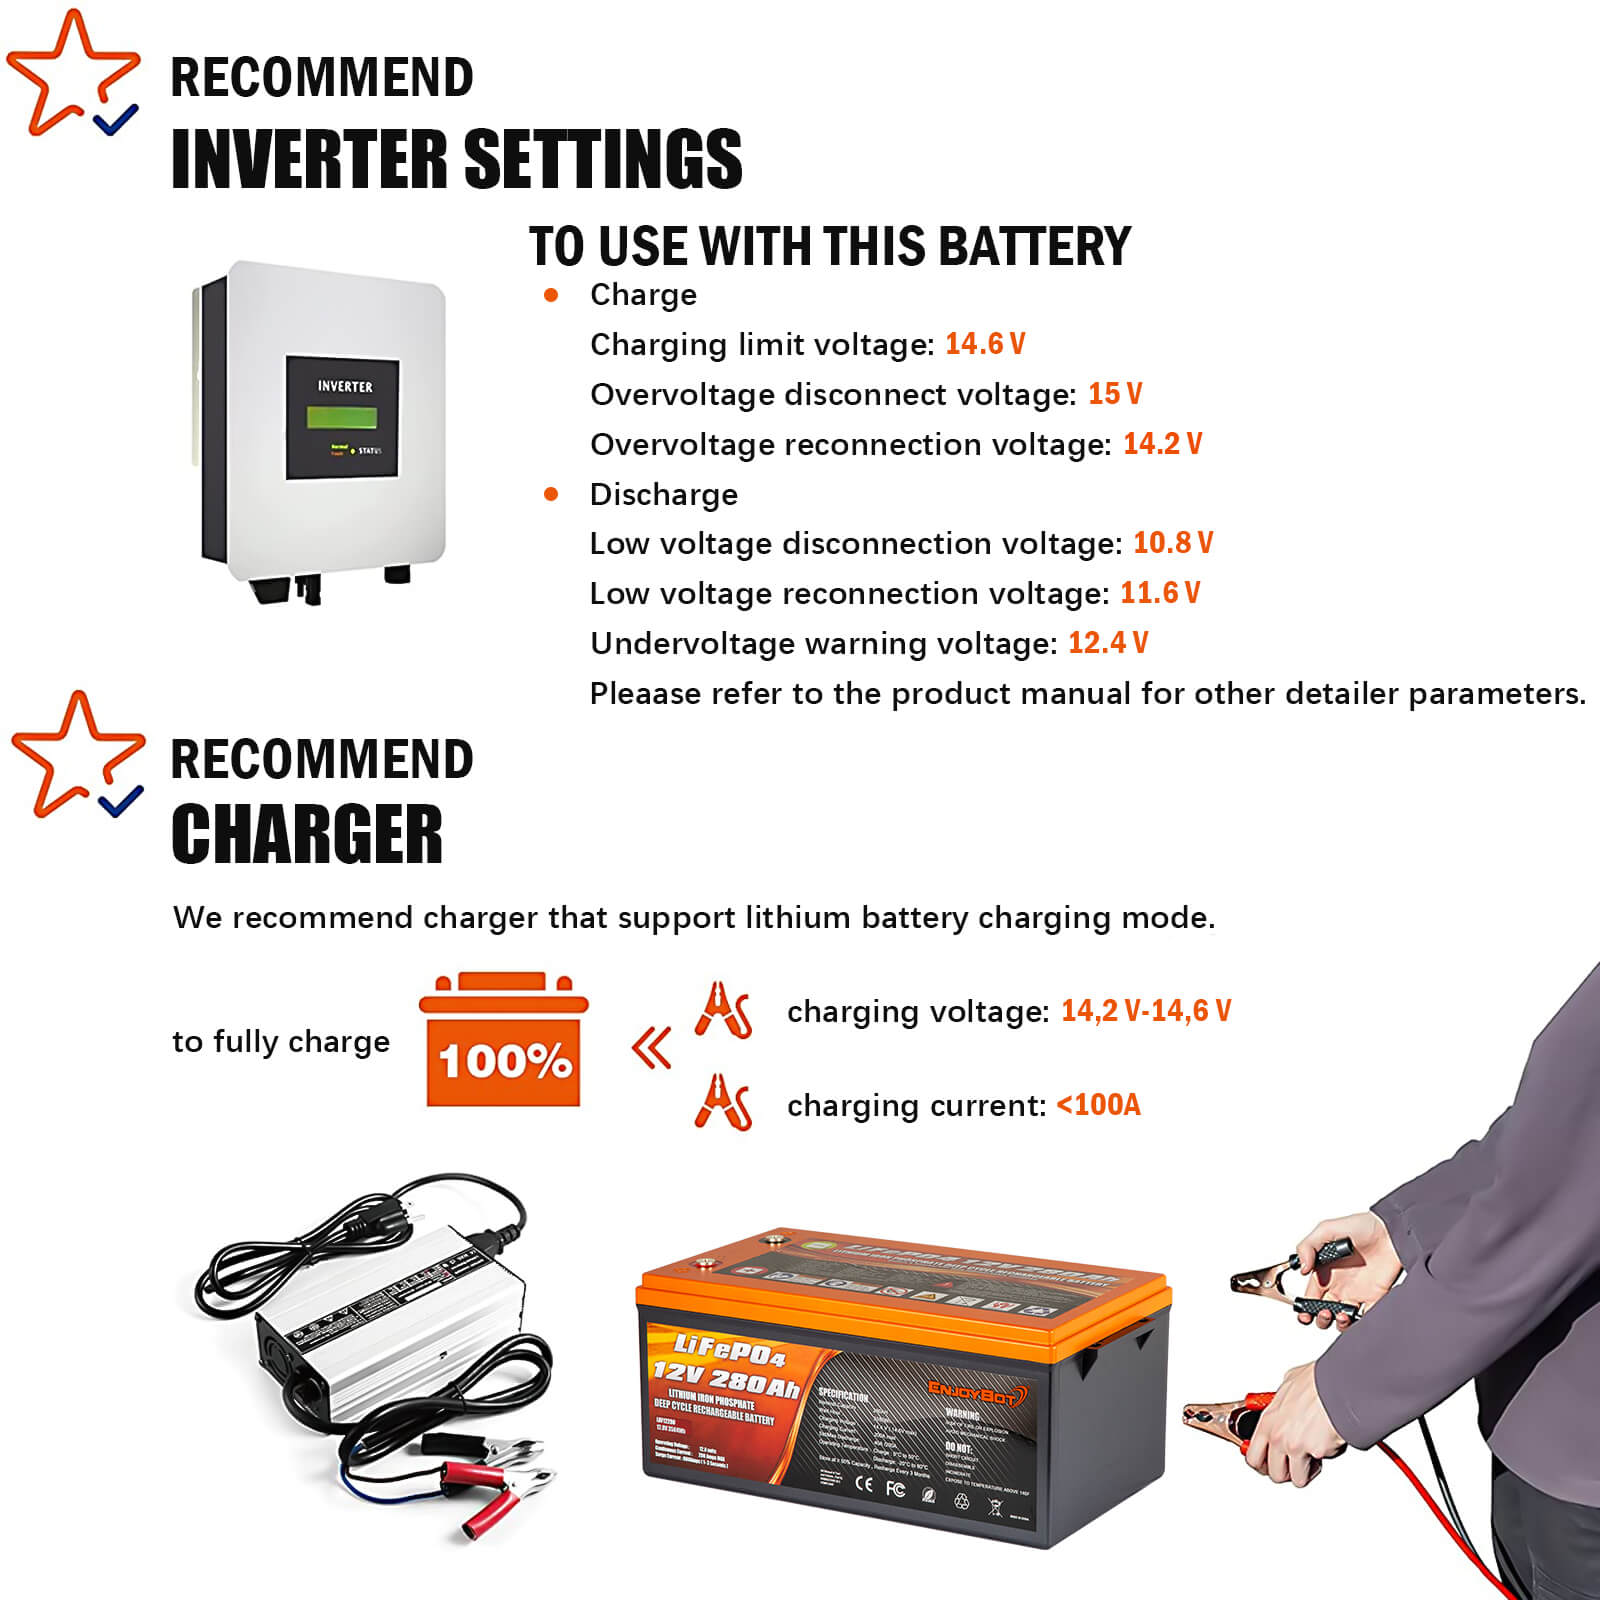 Enjoybot 12v 280ah LiFePO4 Battery - Inverter Setting